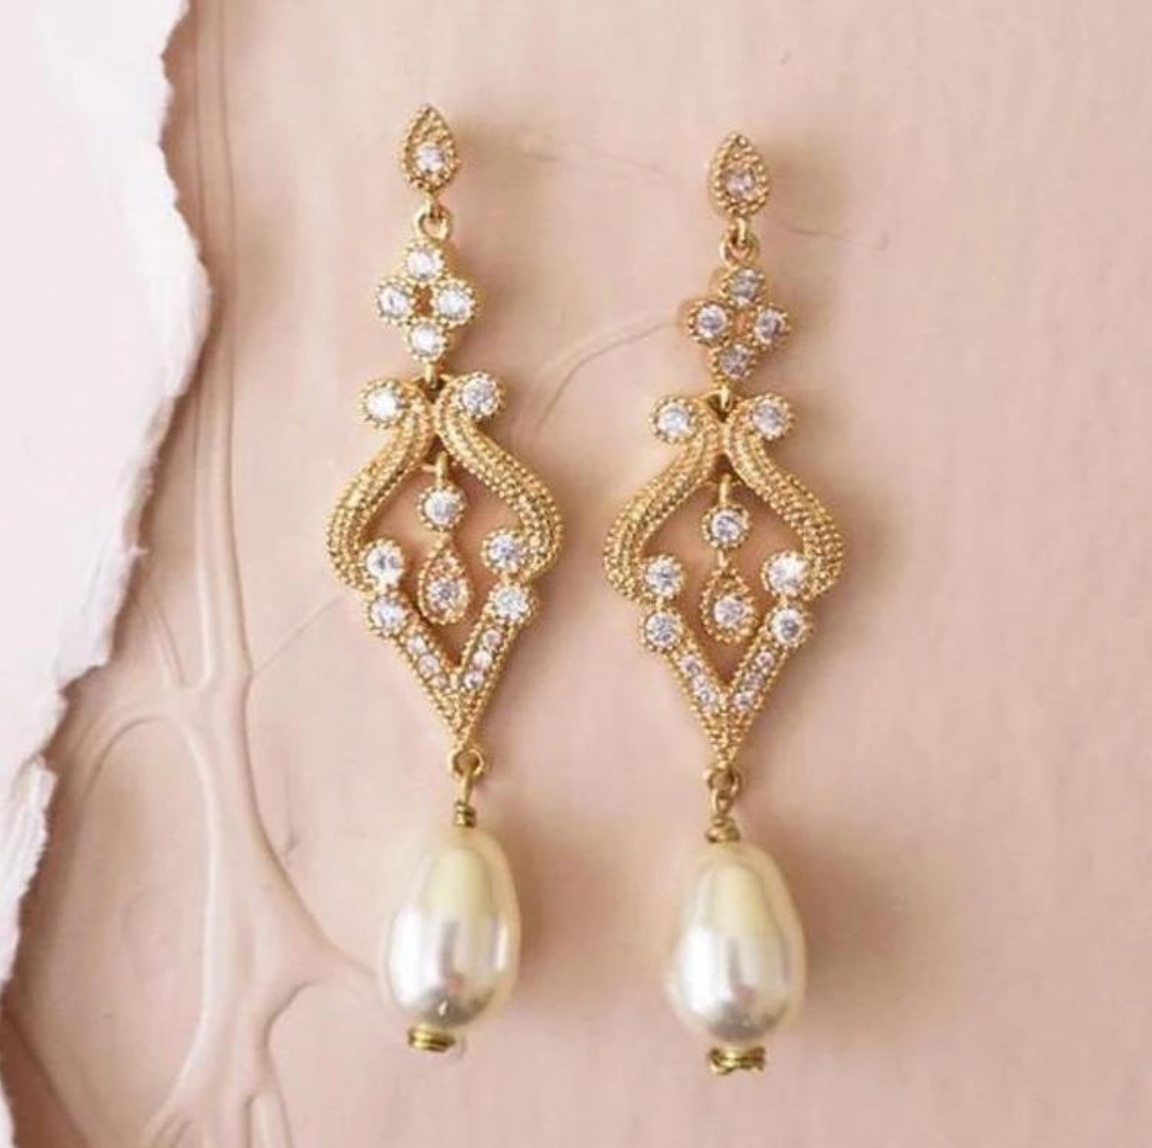 gold bridal earrings in vintage style